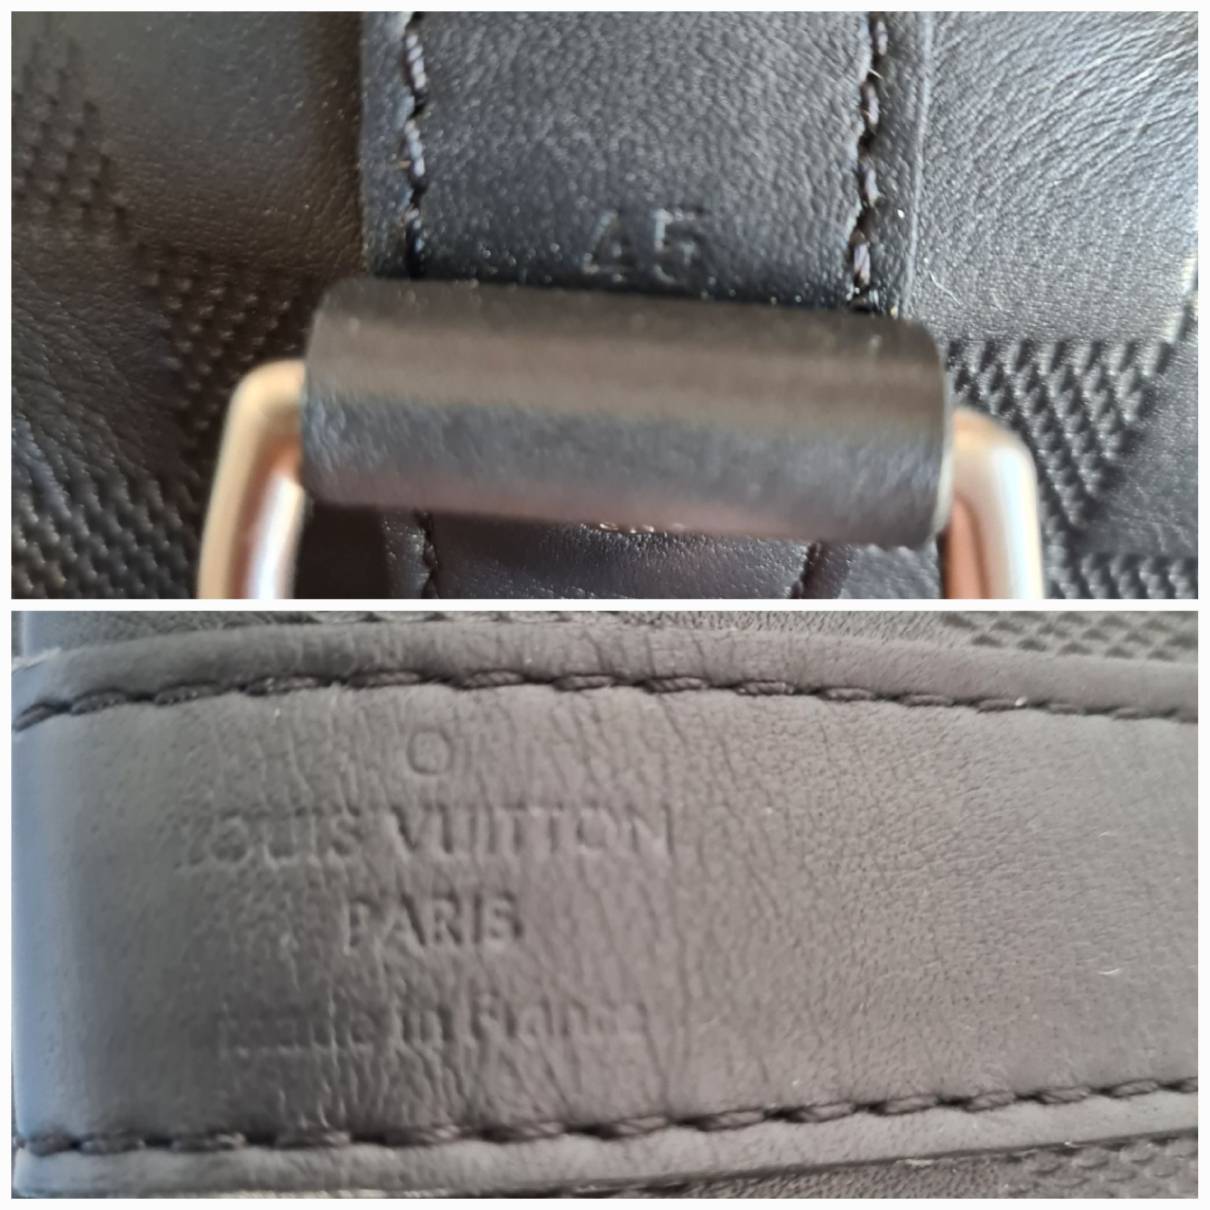 Keepall travel bag Louis Vuitton Black in Cotton - 34318831